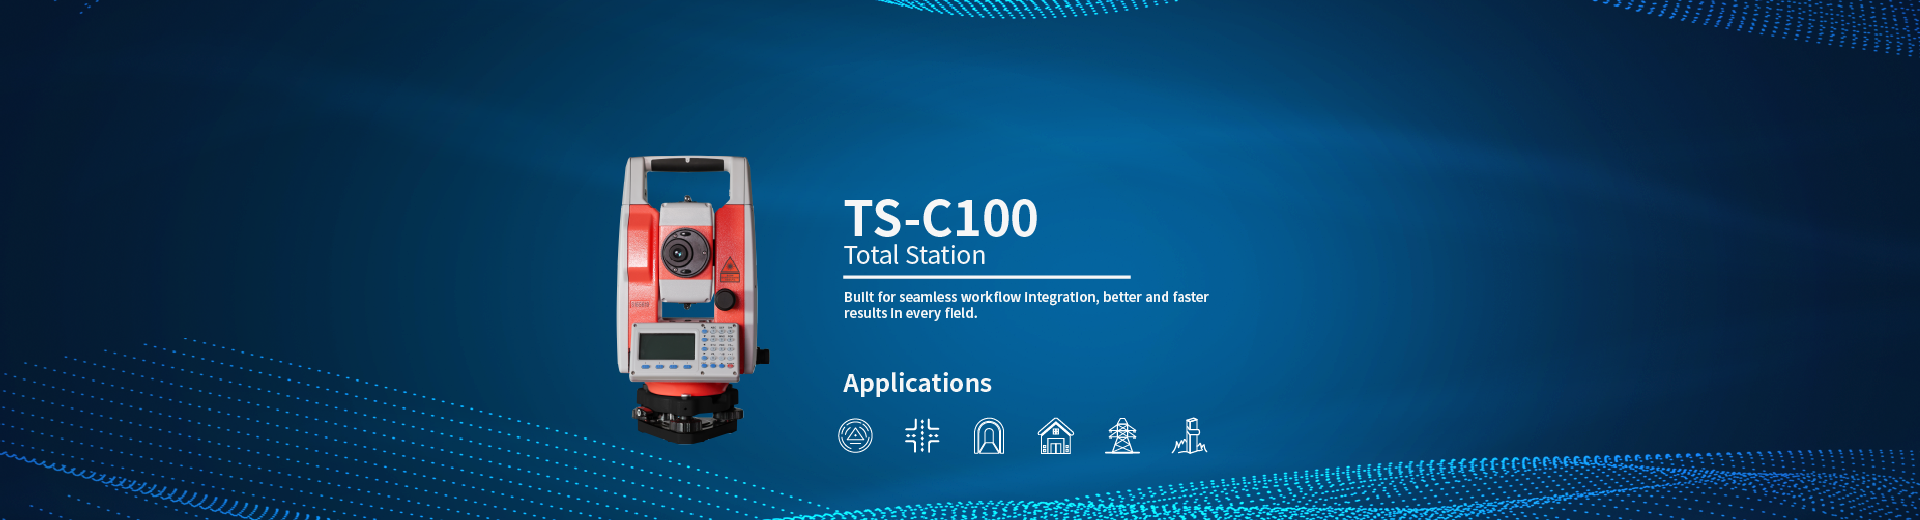 TS-C100 Total Station